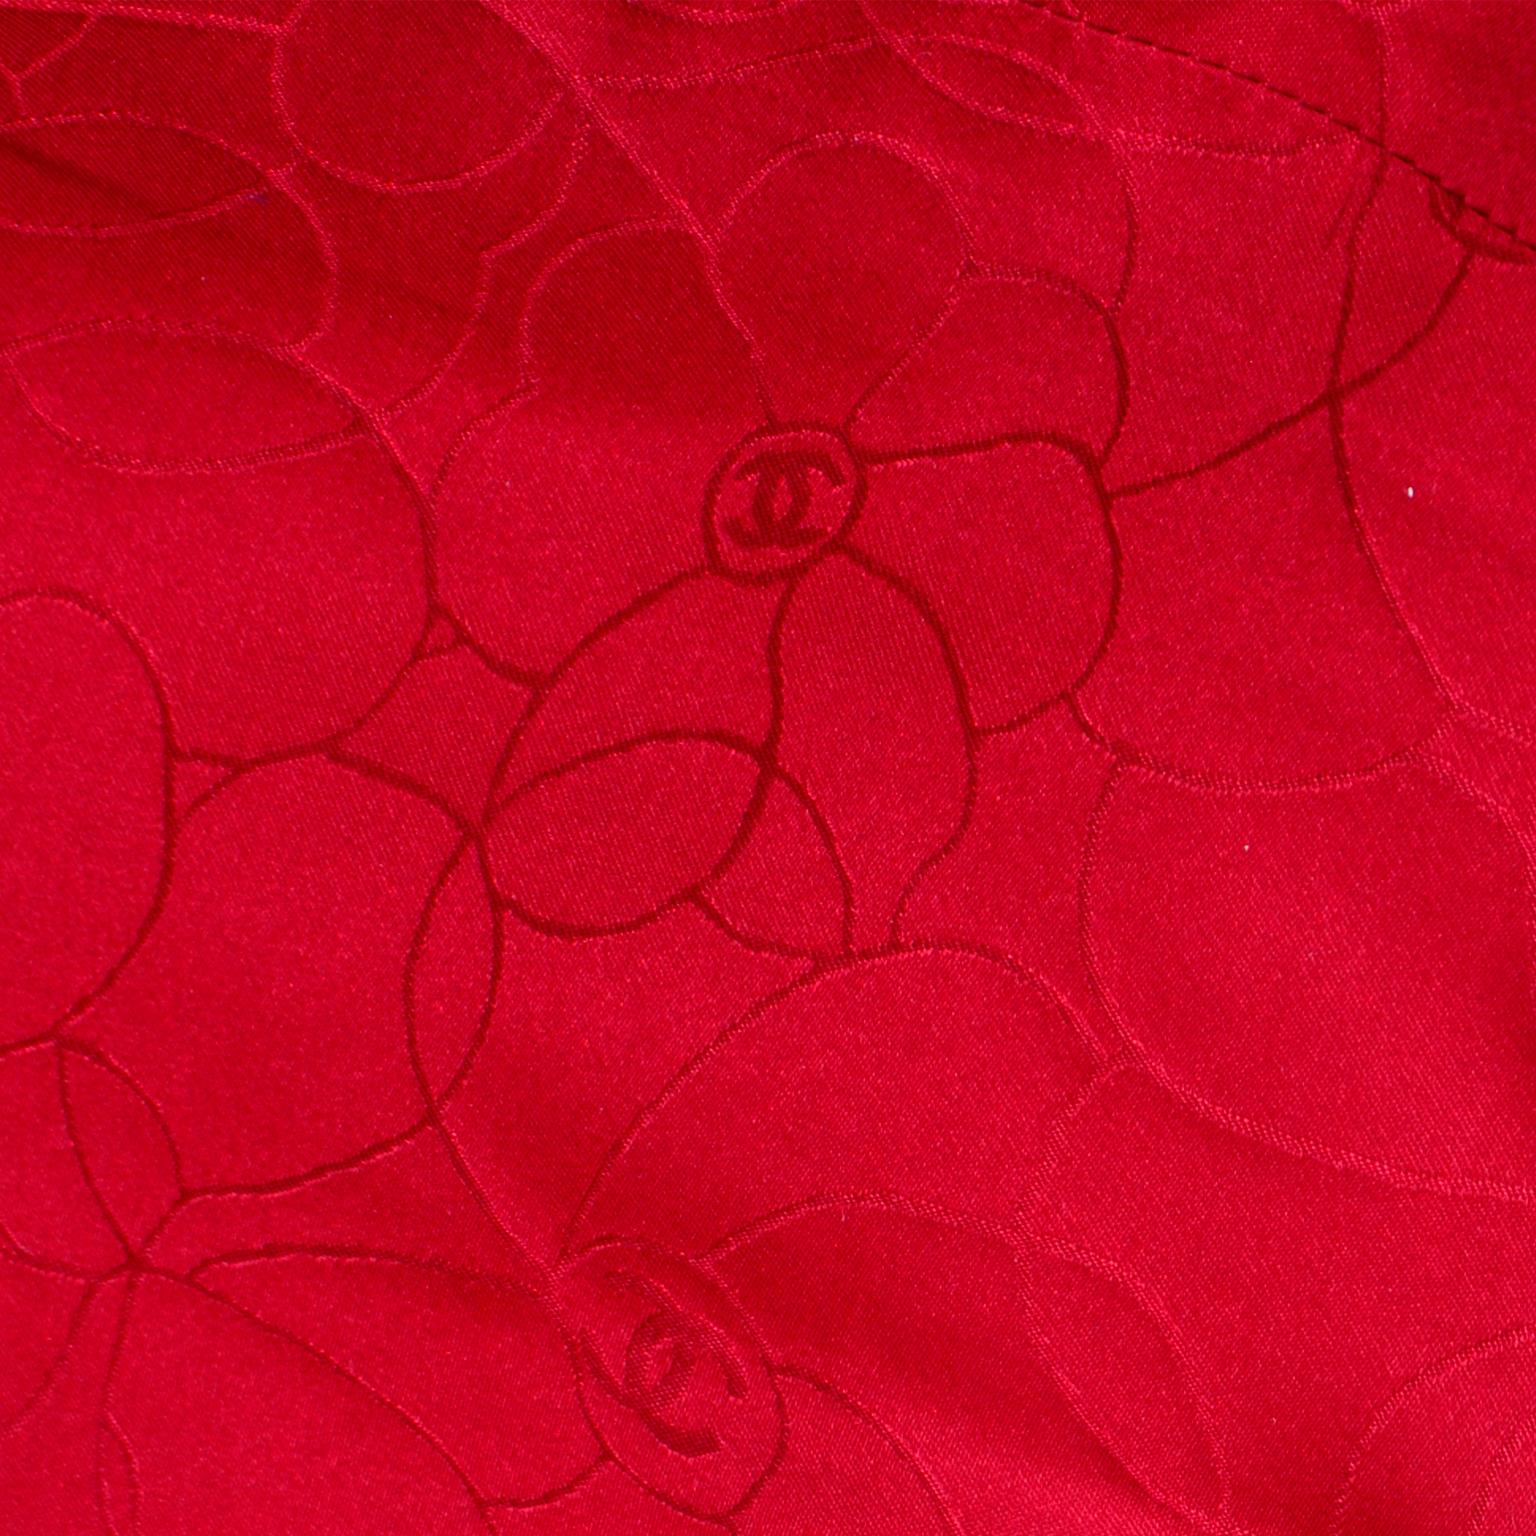 2001 Red Wool Blend Chanel Blazer Jacket W Notch Collar and CC Button Closure 6